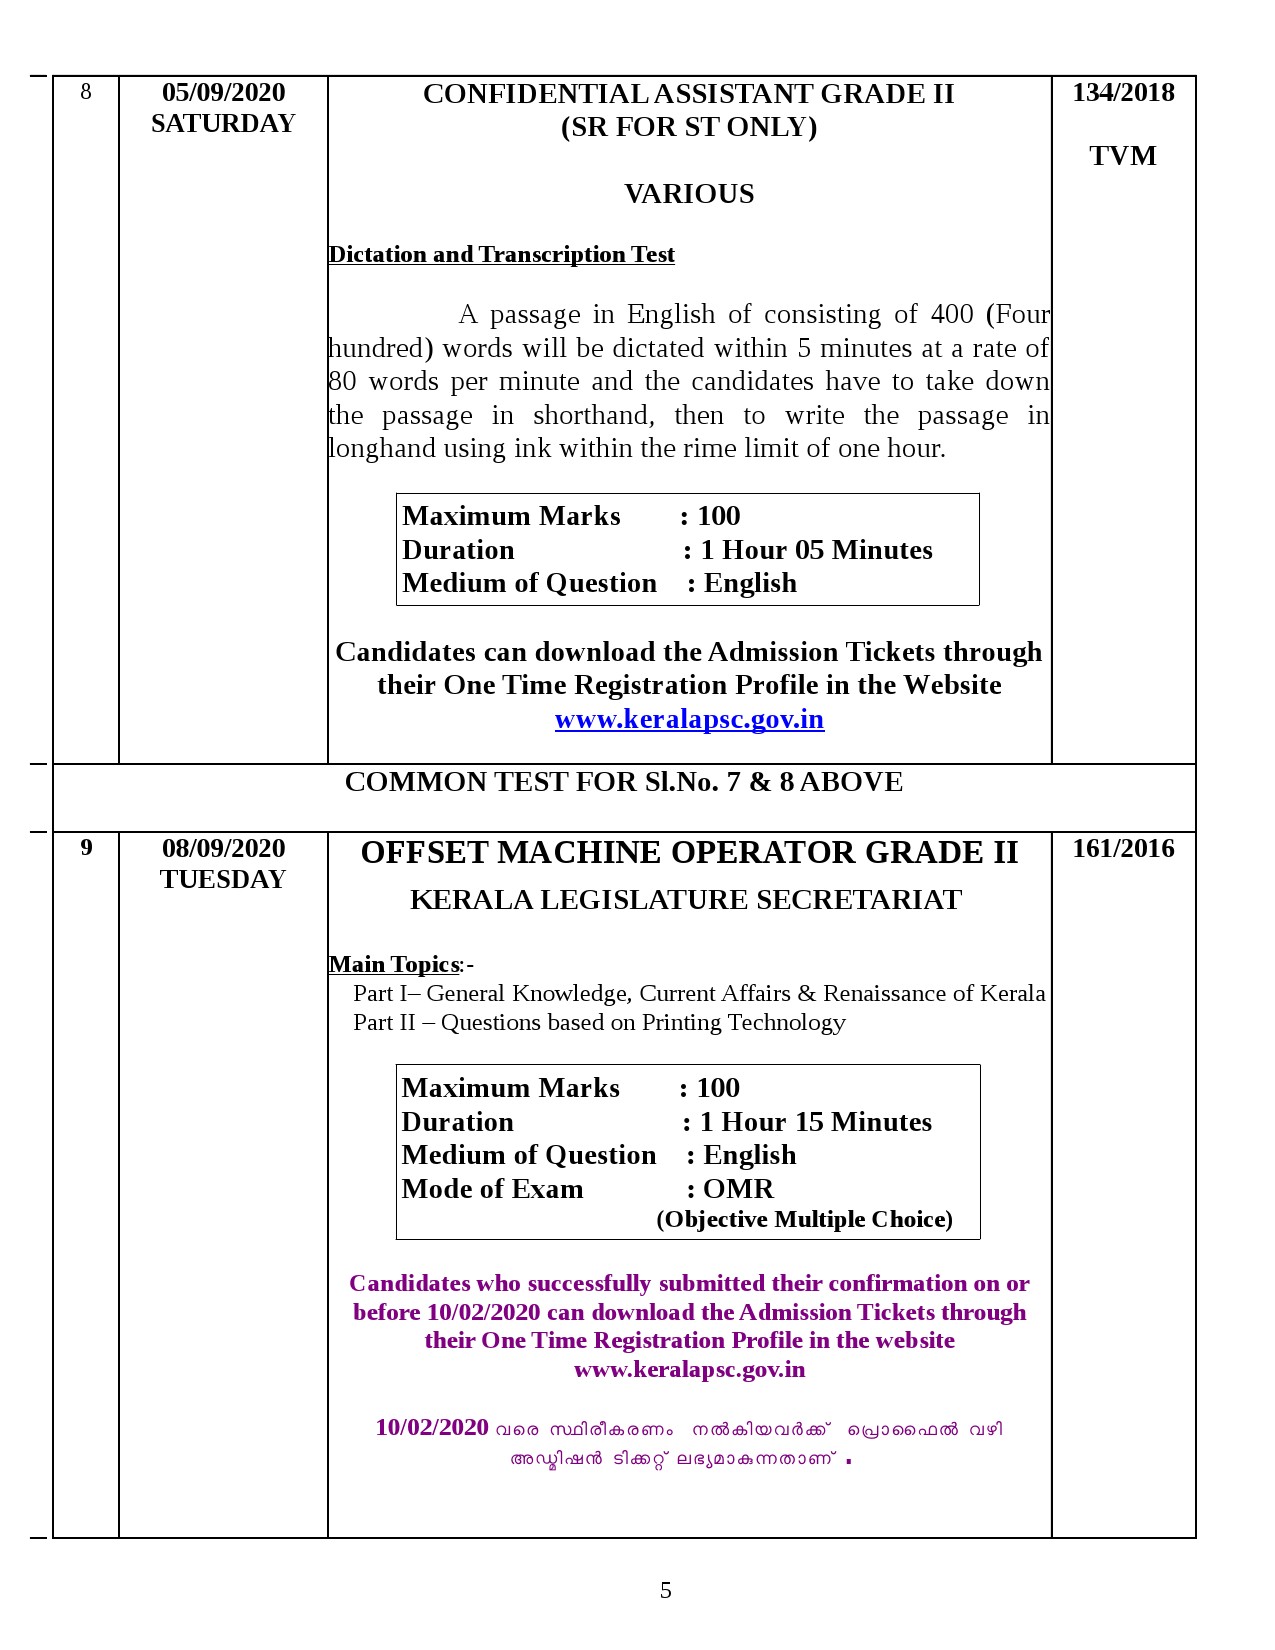 Kerala PSC Exam Calendar September 2020 - Notification Image 5